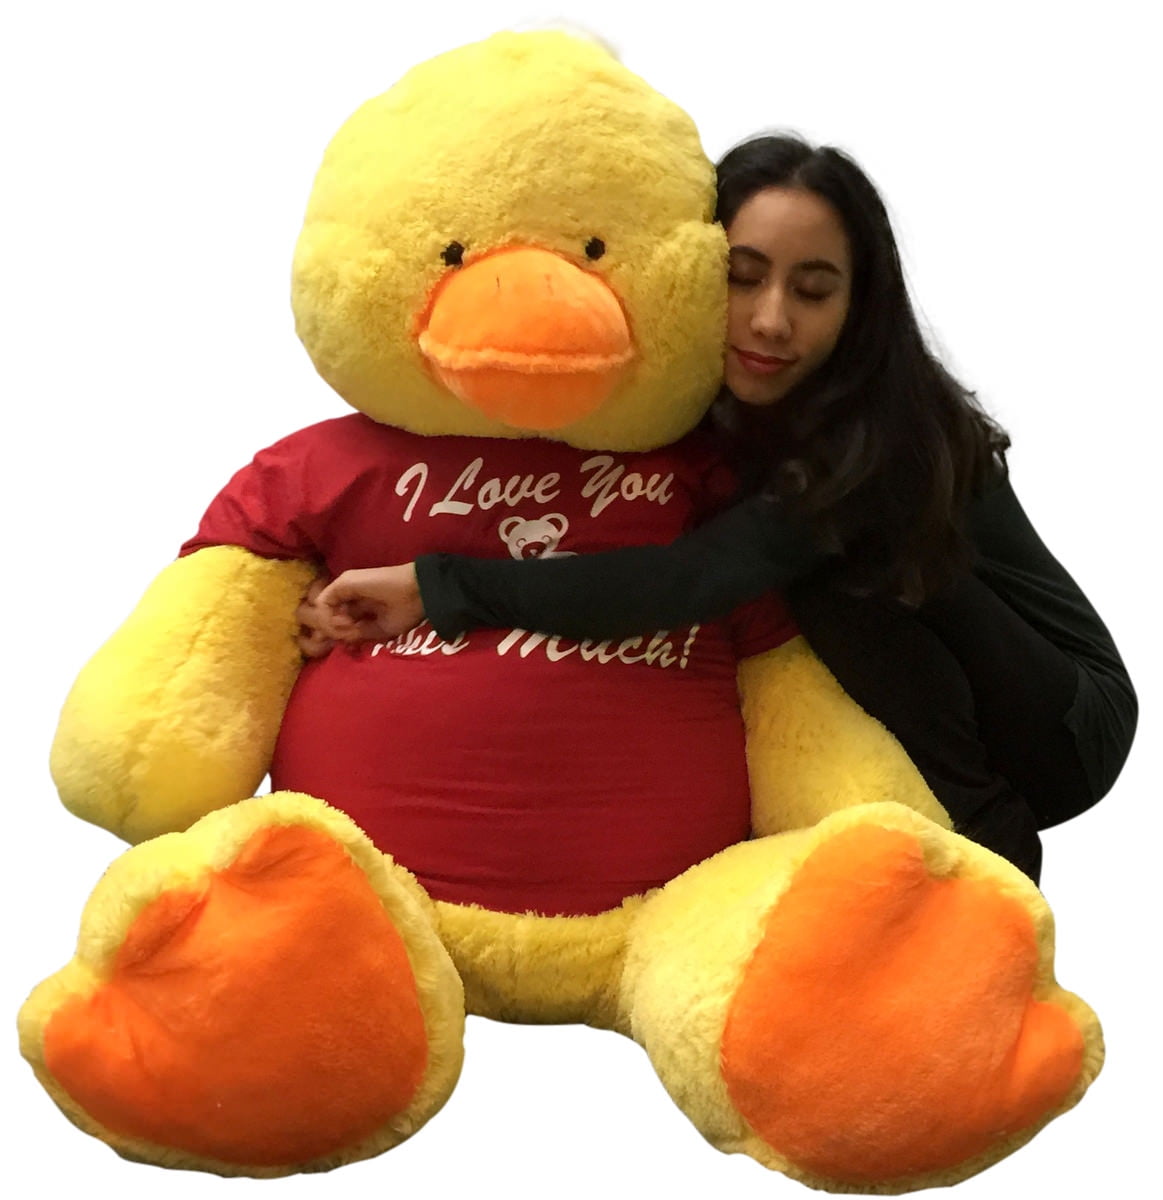 life size duck stuffed animal